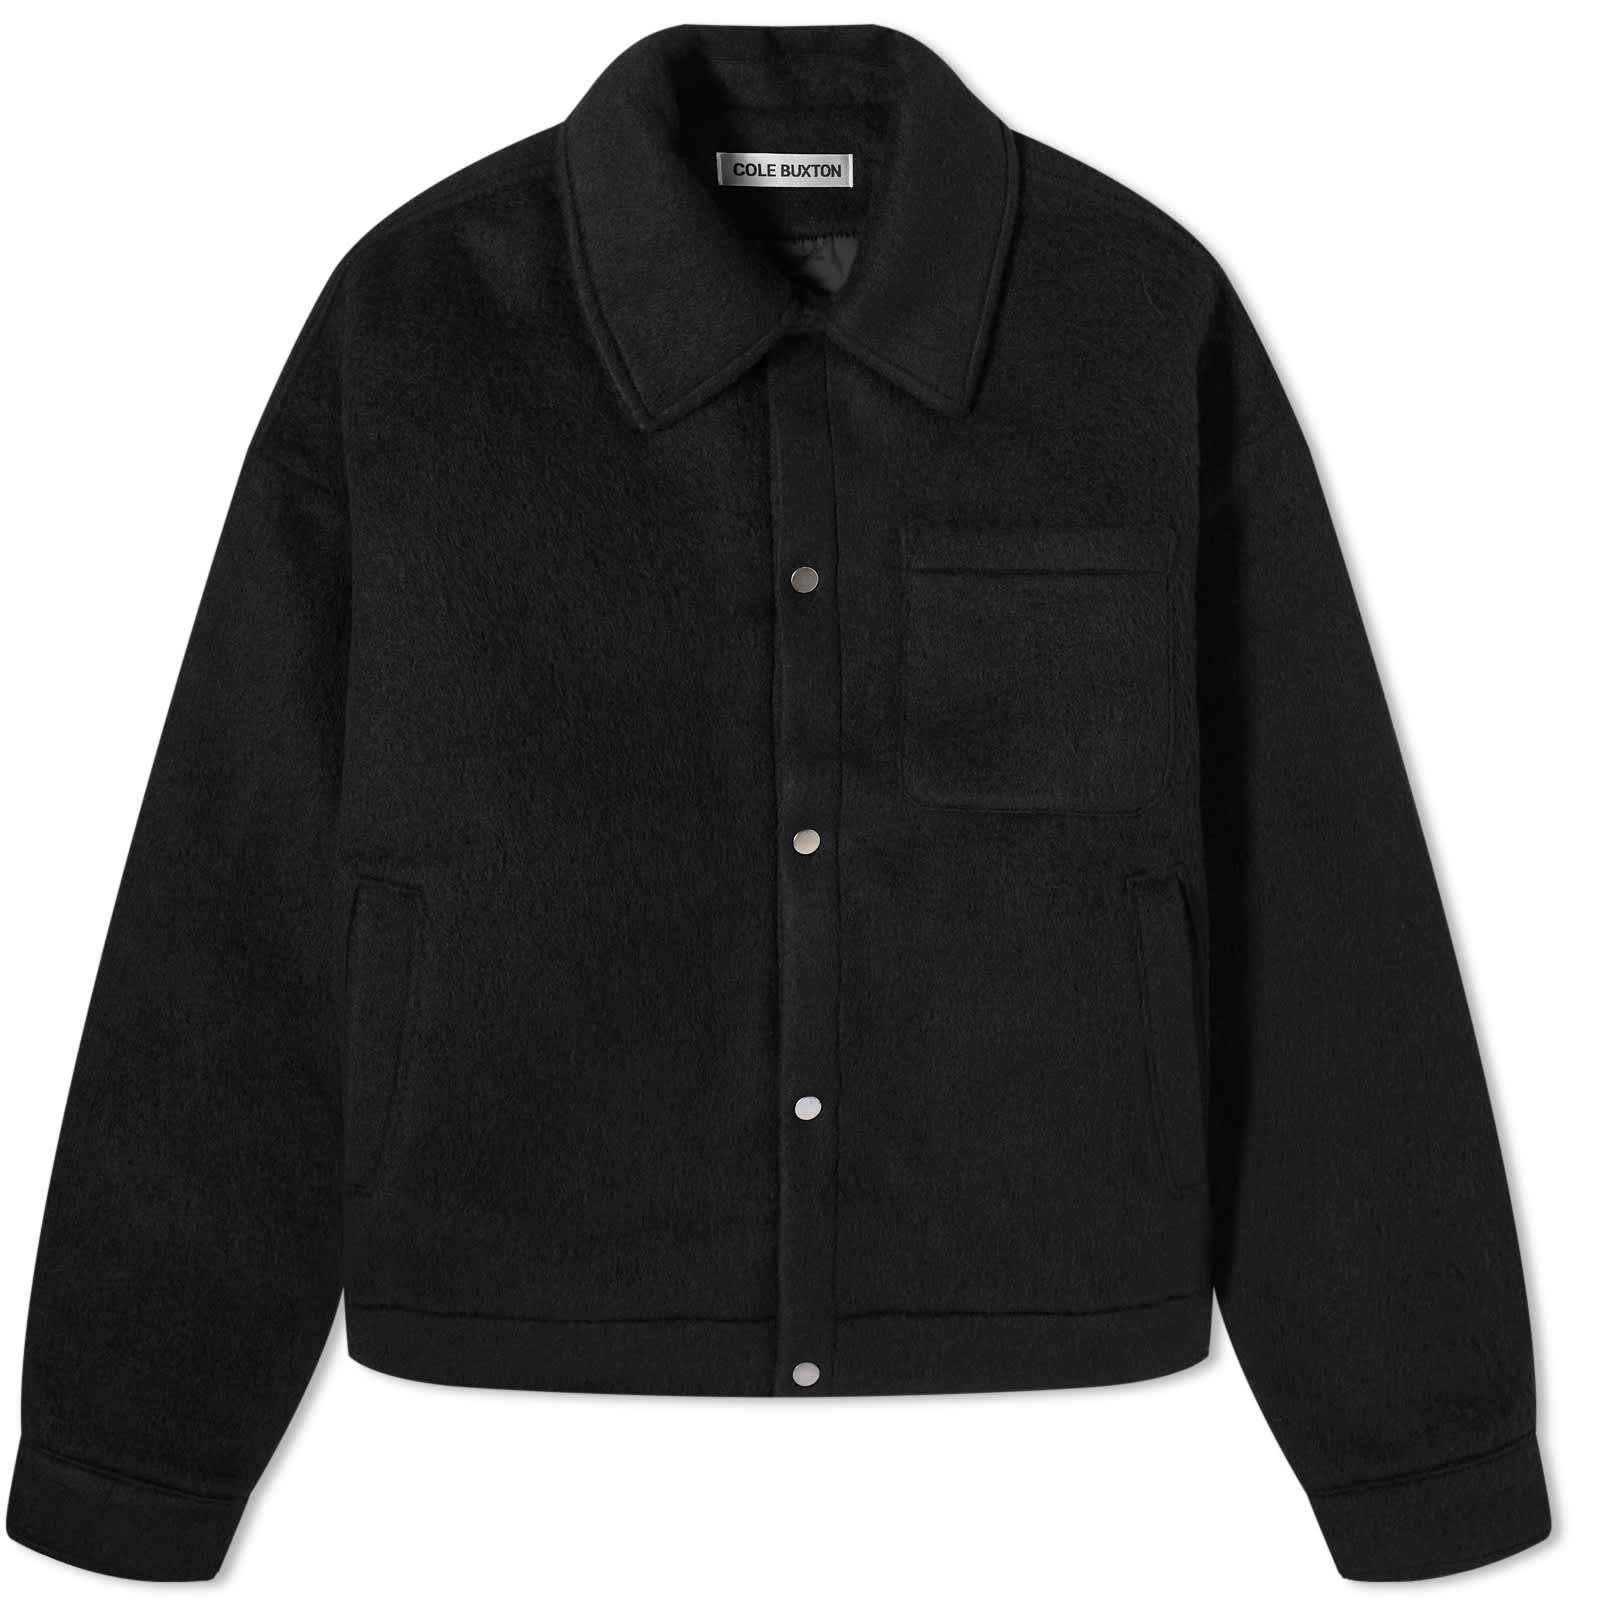 Рубашка Cole Buxton Wool Overshirt, черный цена и фото